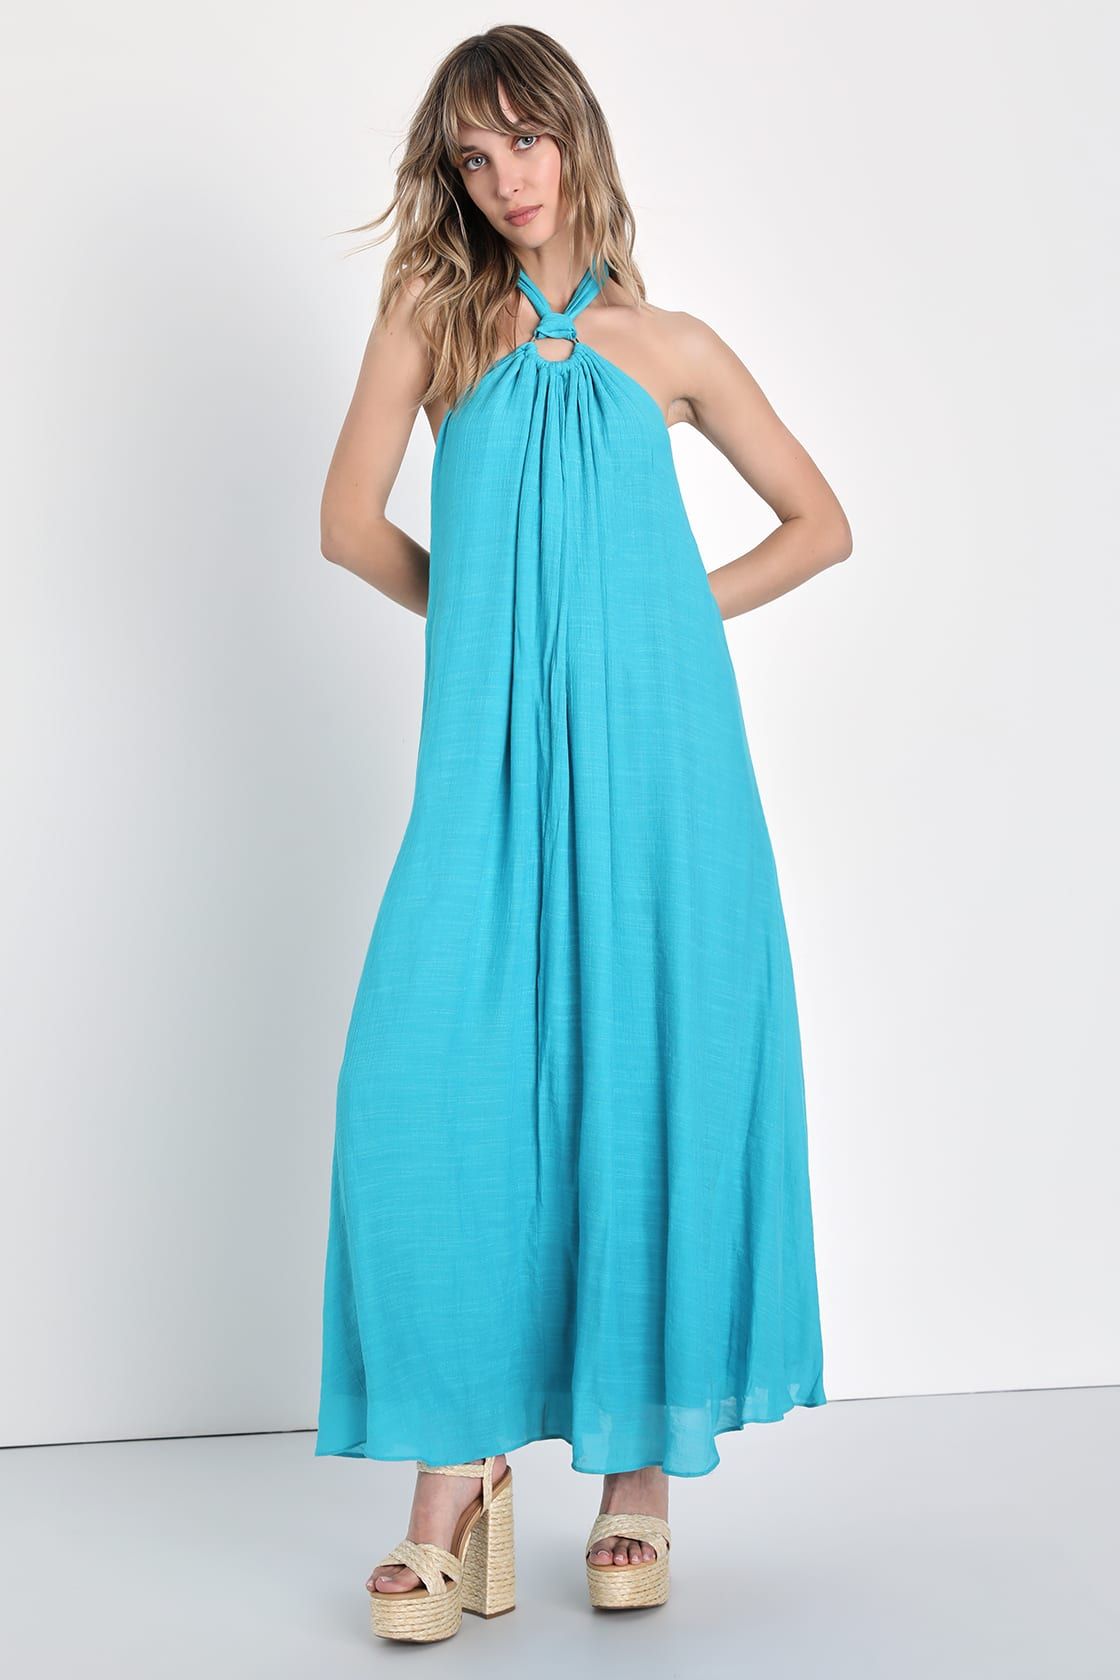 Corfu Charm Teal Blue O-Ring Halter Maxi Dress | Lulus